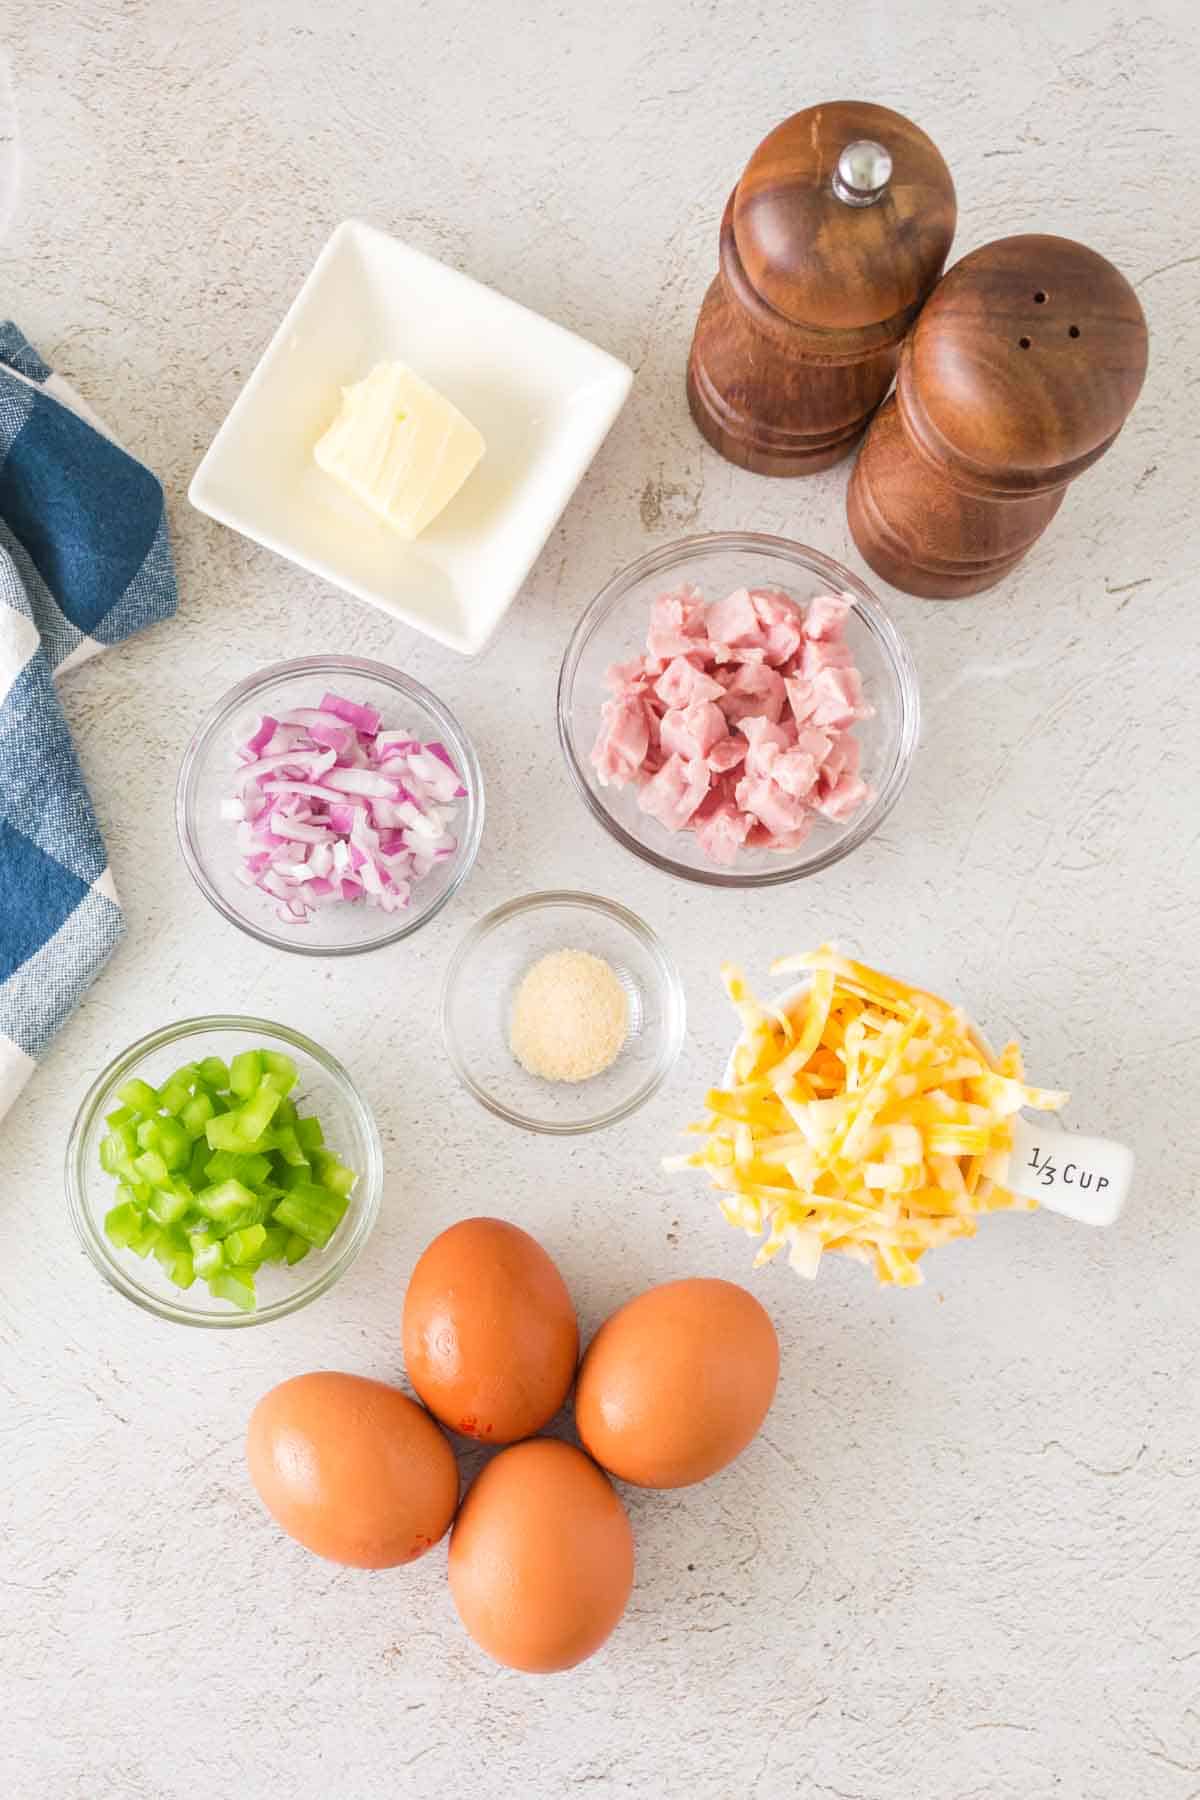 raw ingredients for a denver omelet.